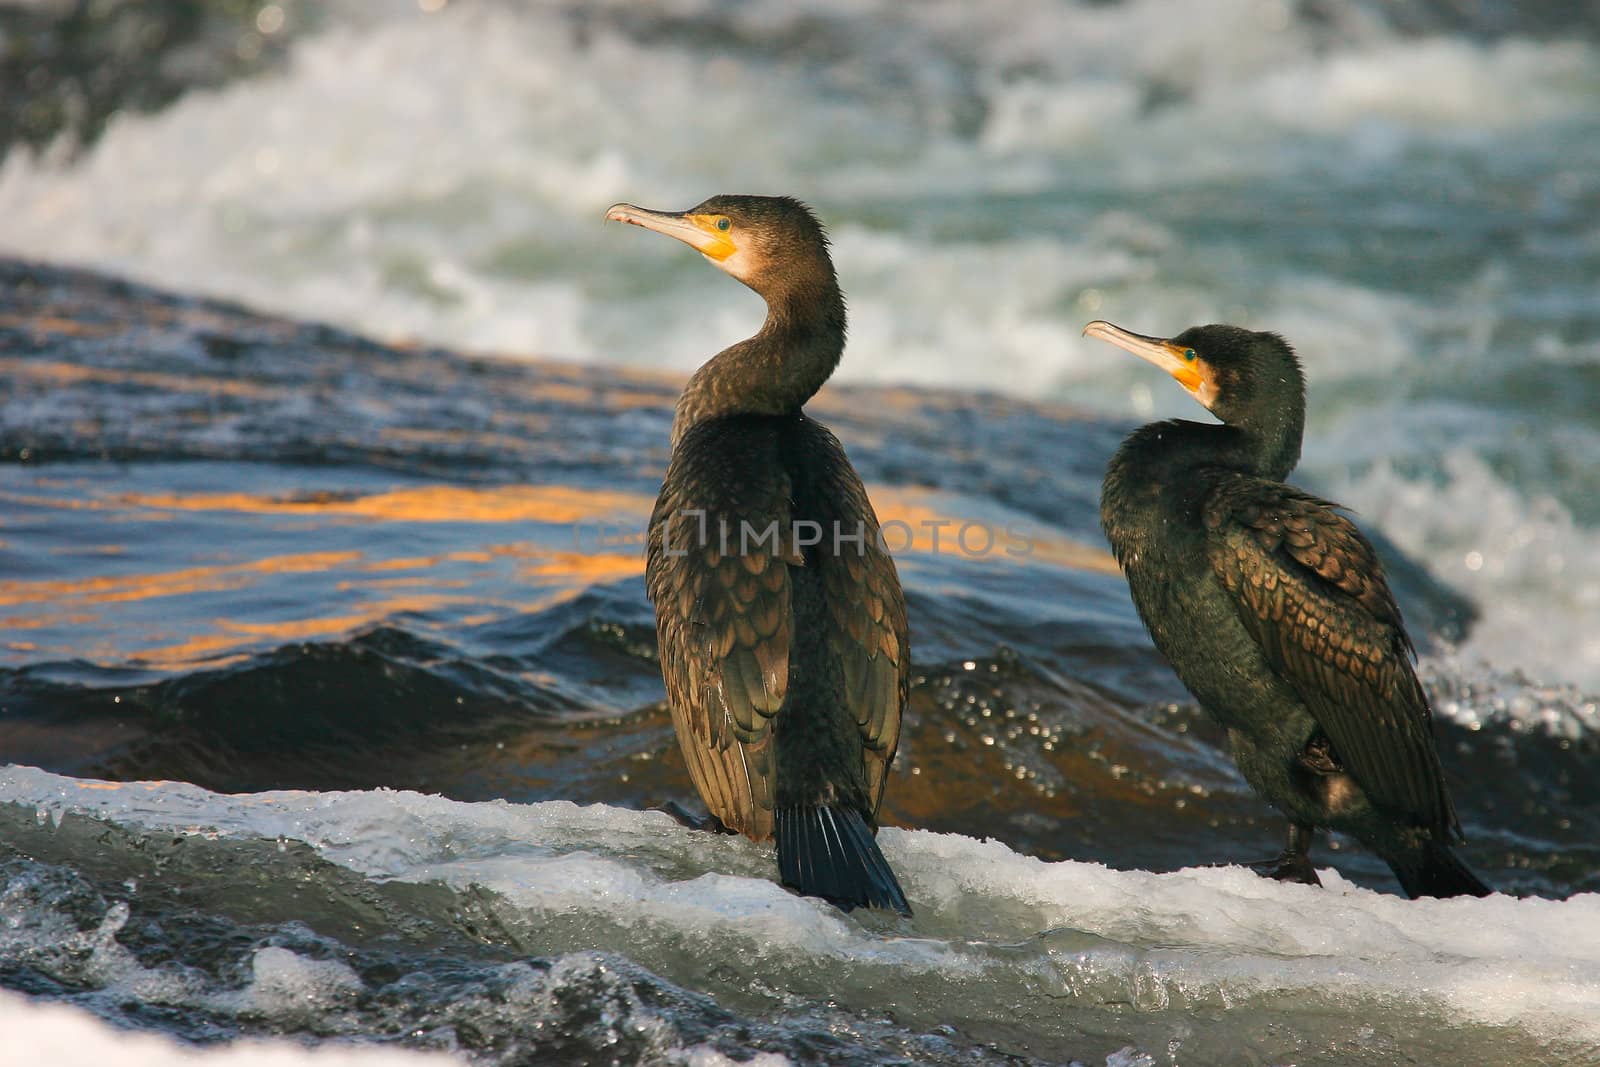 Black cormorants by CaptureLight